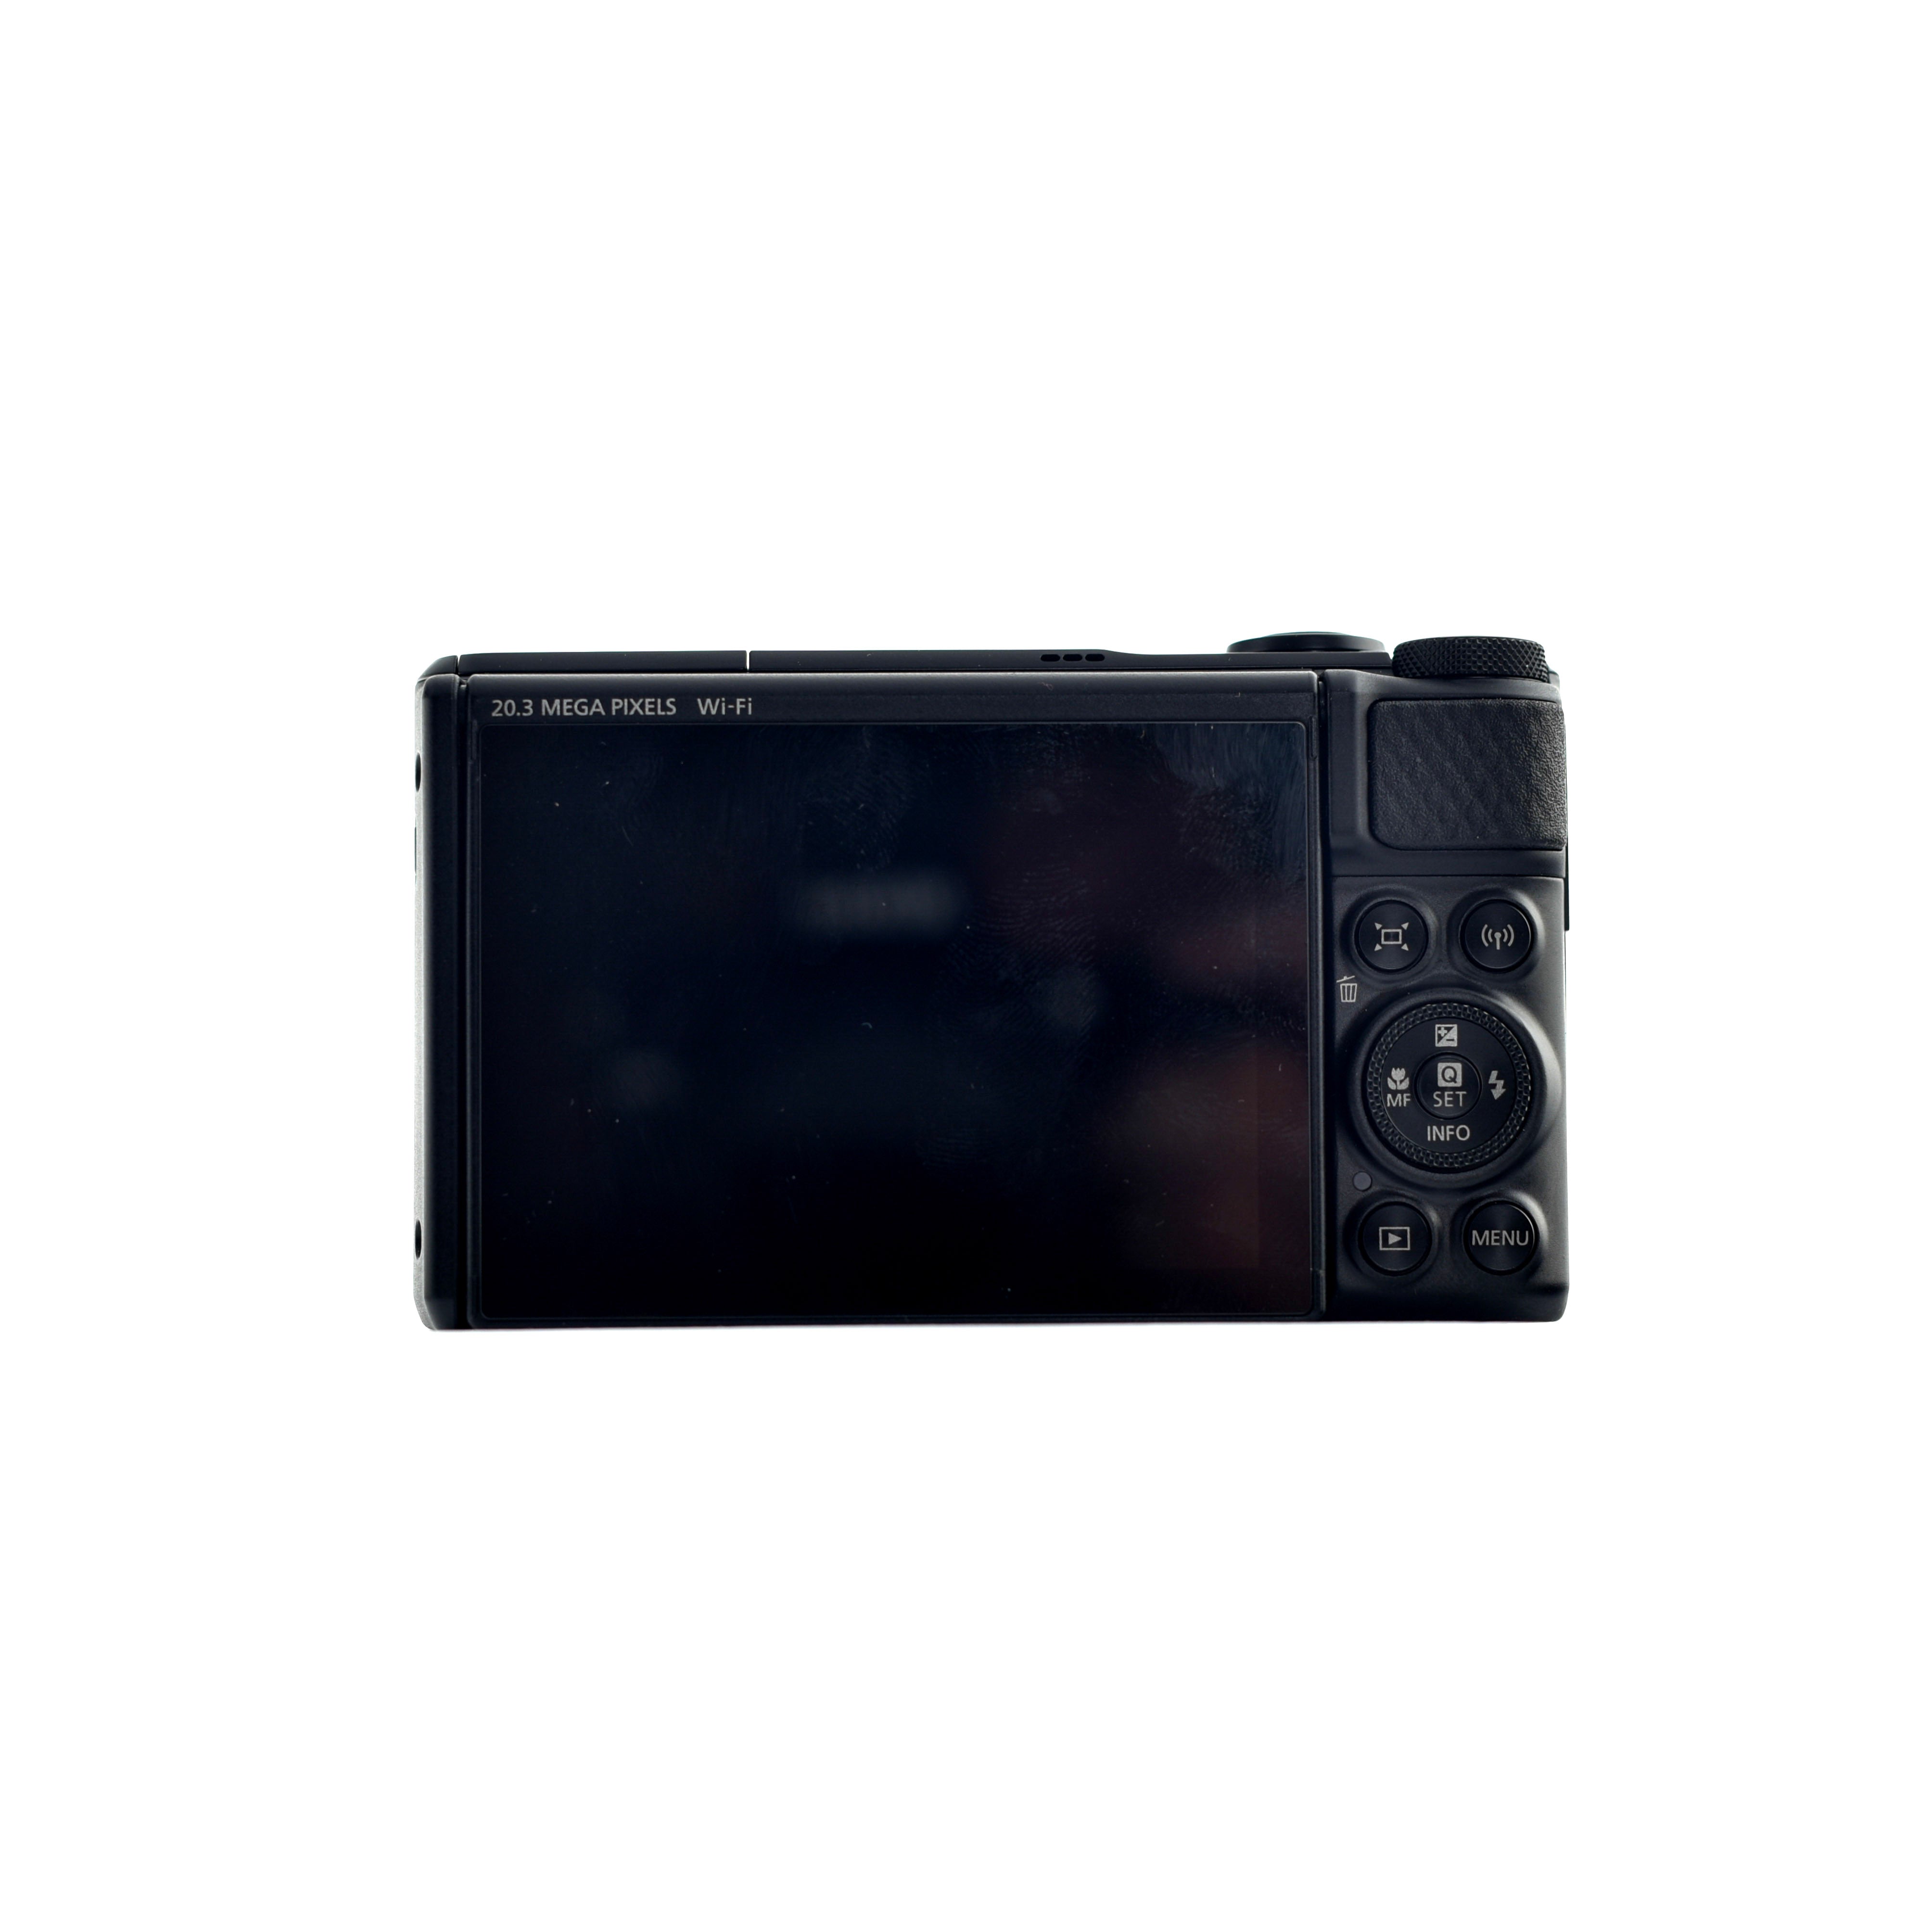 Canon Powershot SX740 HS compact camera (Black)